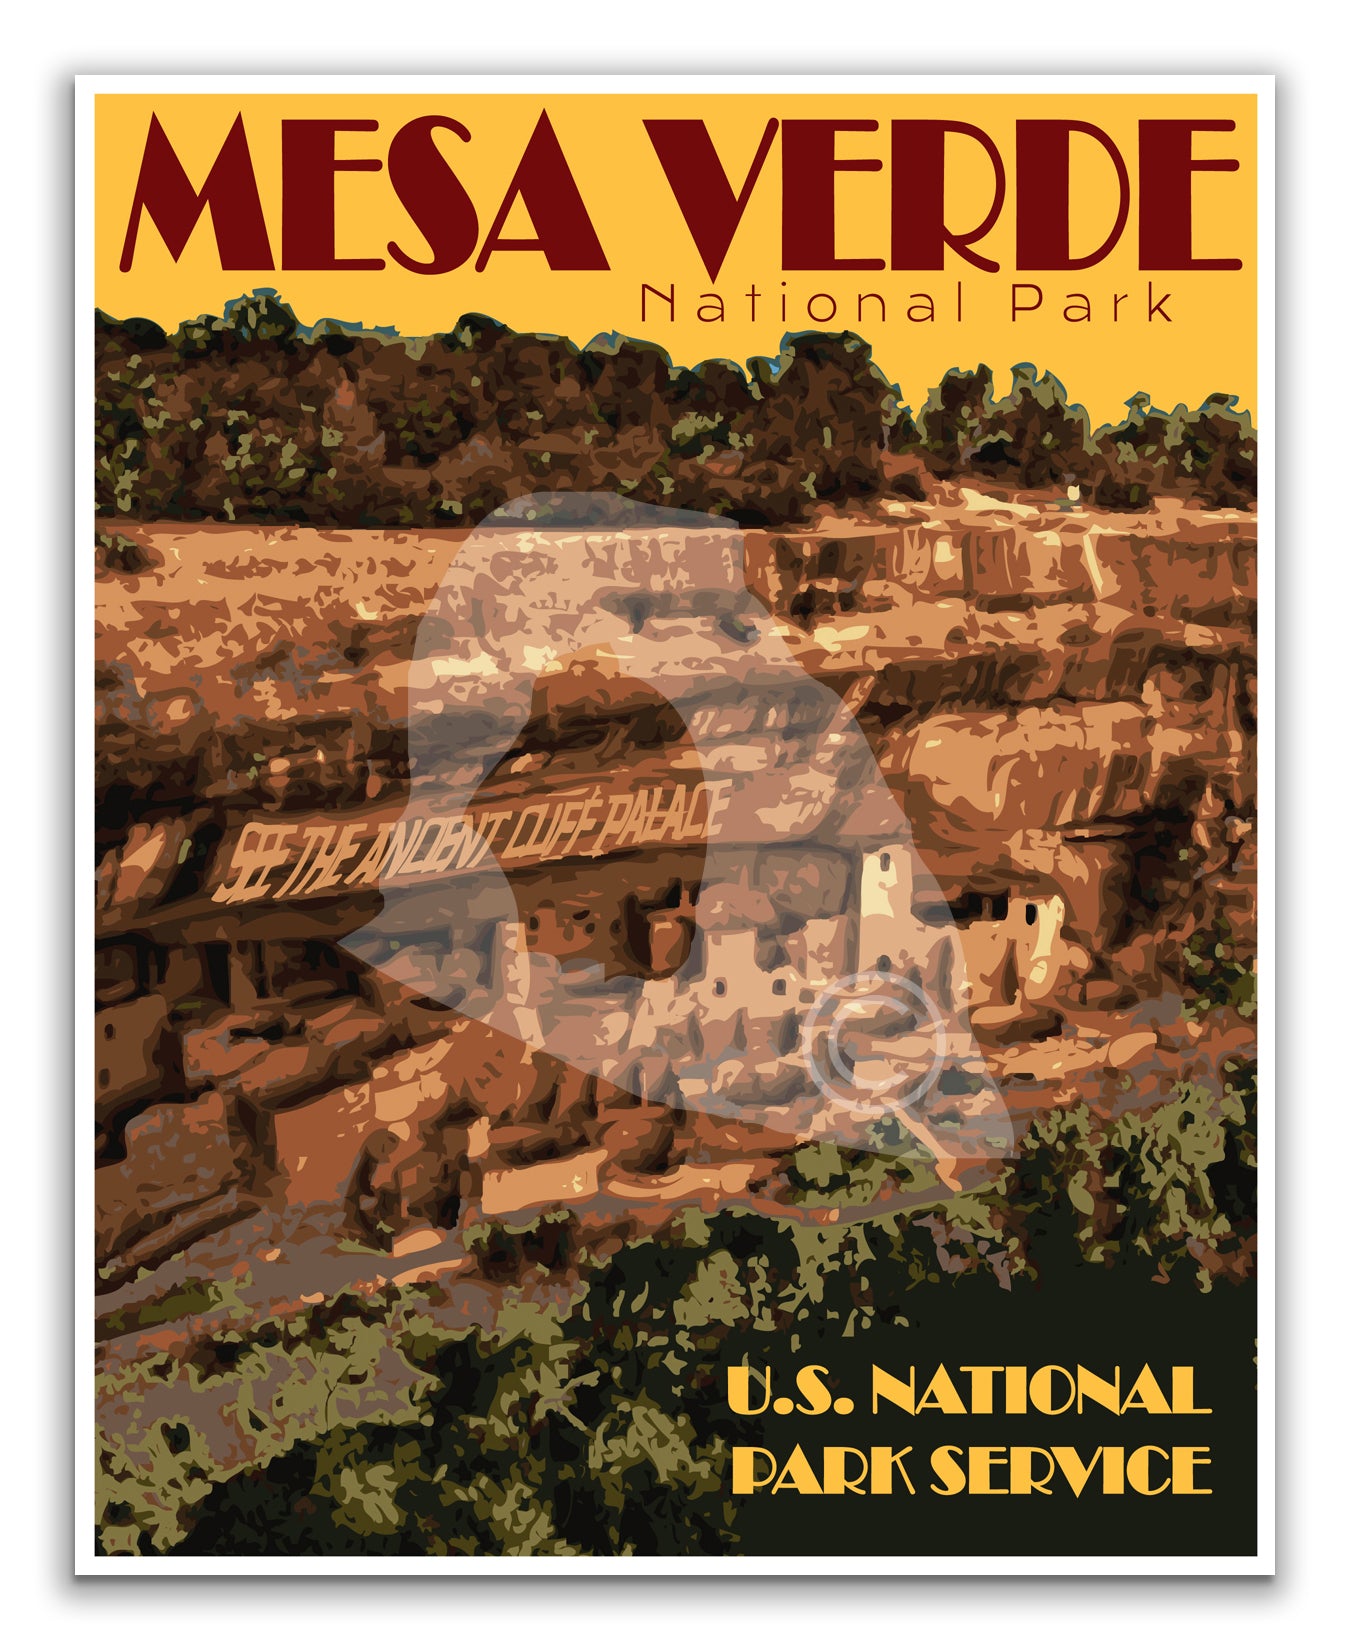 Colorado Vintage Style Travel Posters, Garden of the Gods Print, Rocky Mountain National Park Print, Mesa Verde National Park Print, Three Print Value Set